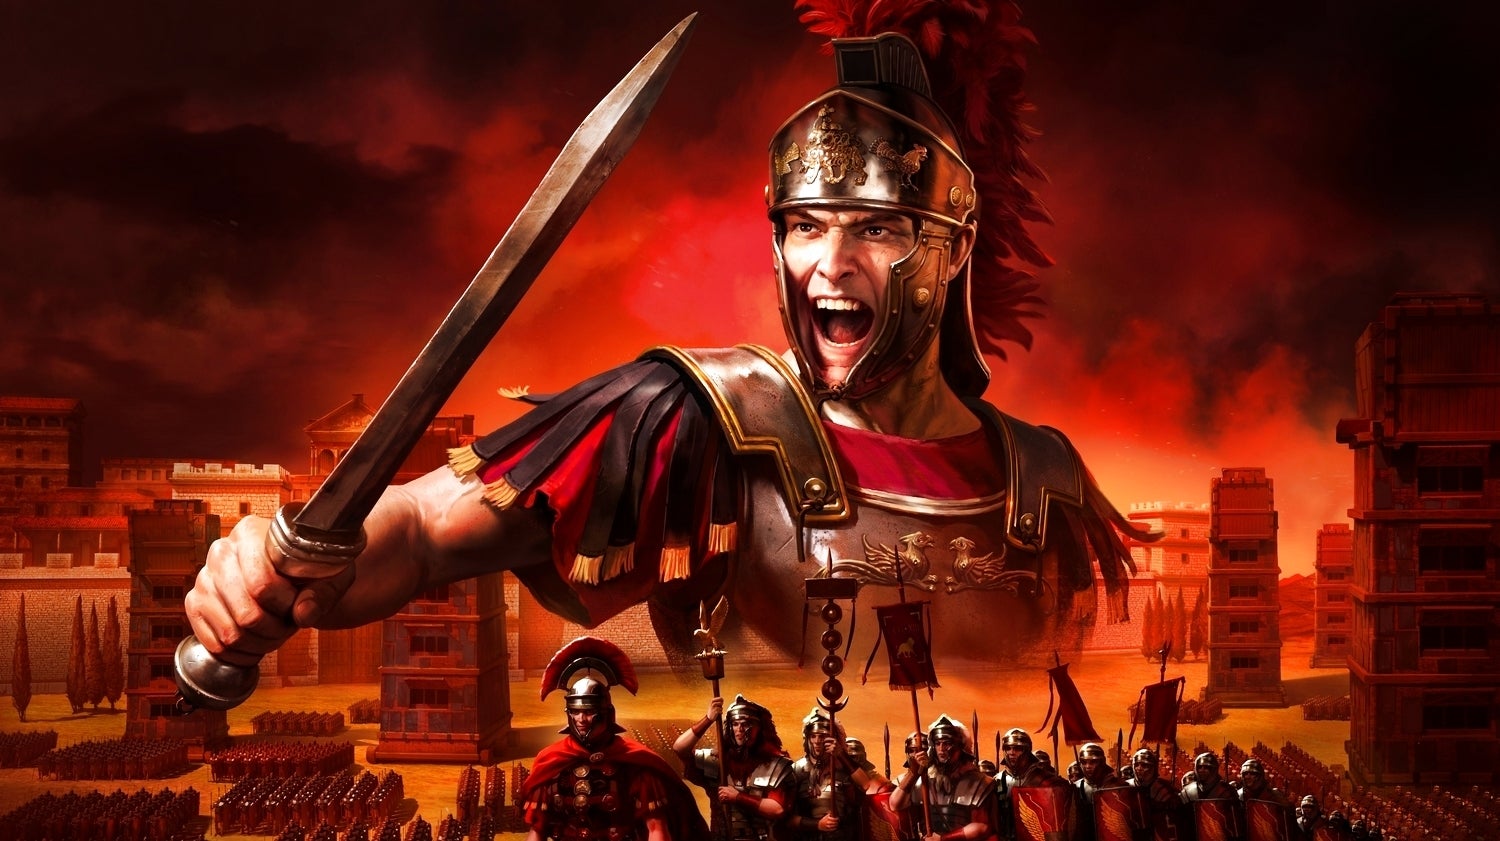 Bilder zu Total War: Rome Remastered angekündigt - erscheint bereits Ende April